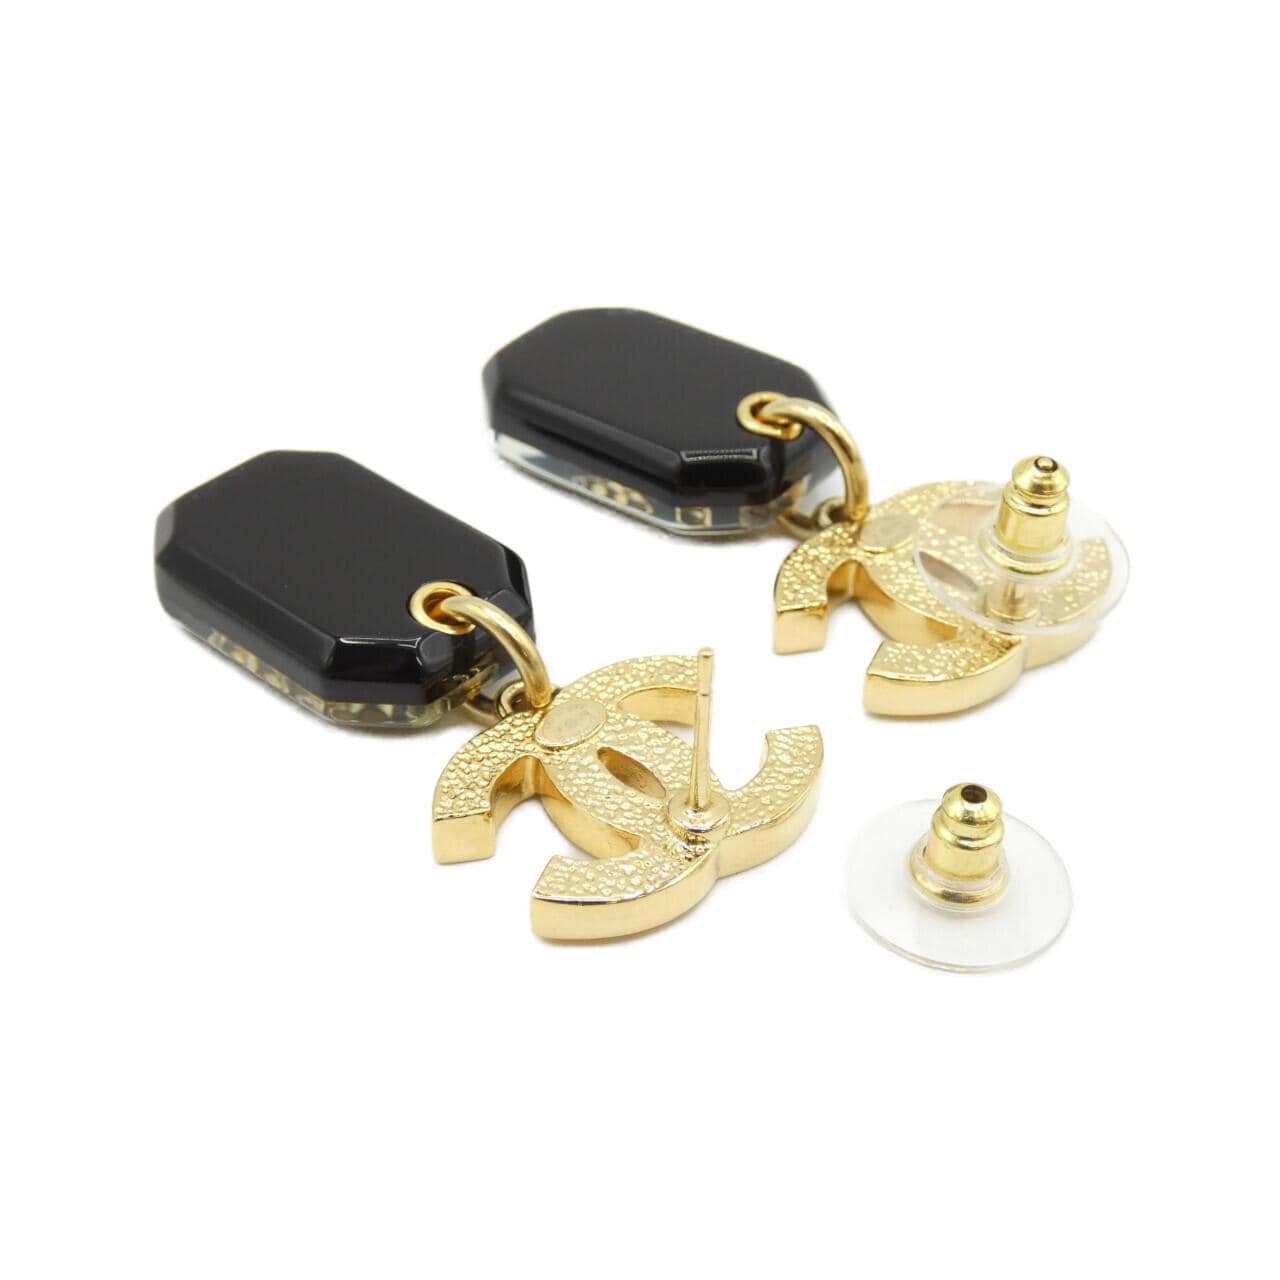 [Unused items] CHANEL ABB357 earrings